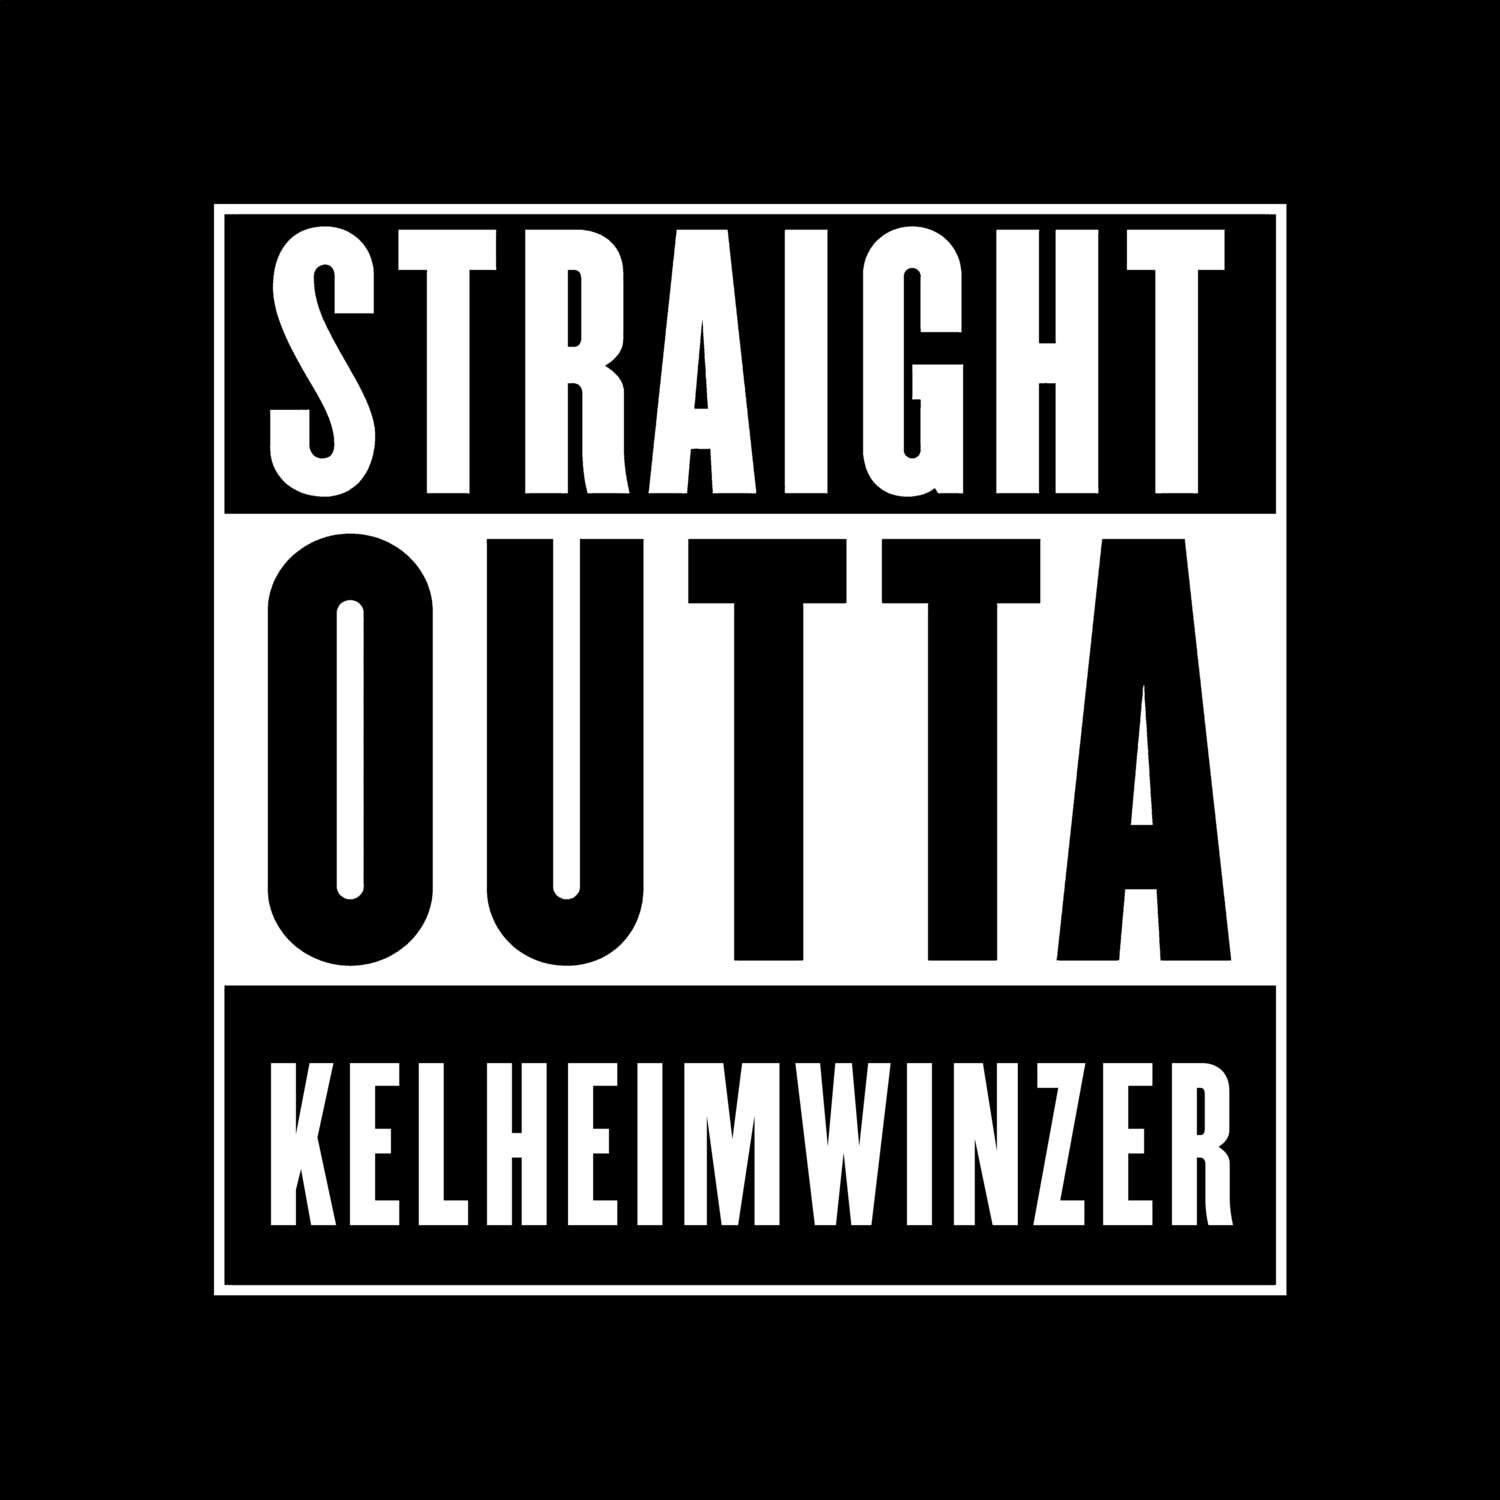 Kelheimwinzer T-Shirt »Straight Outta«